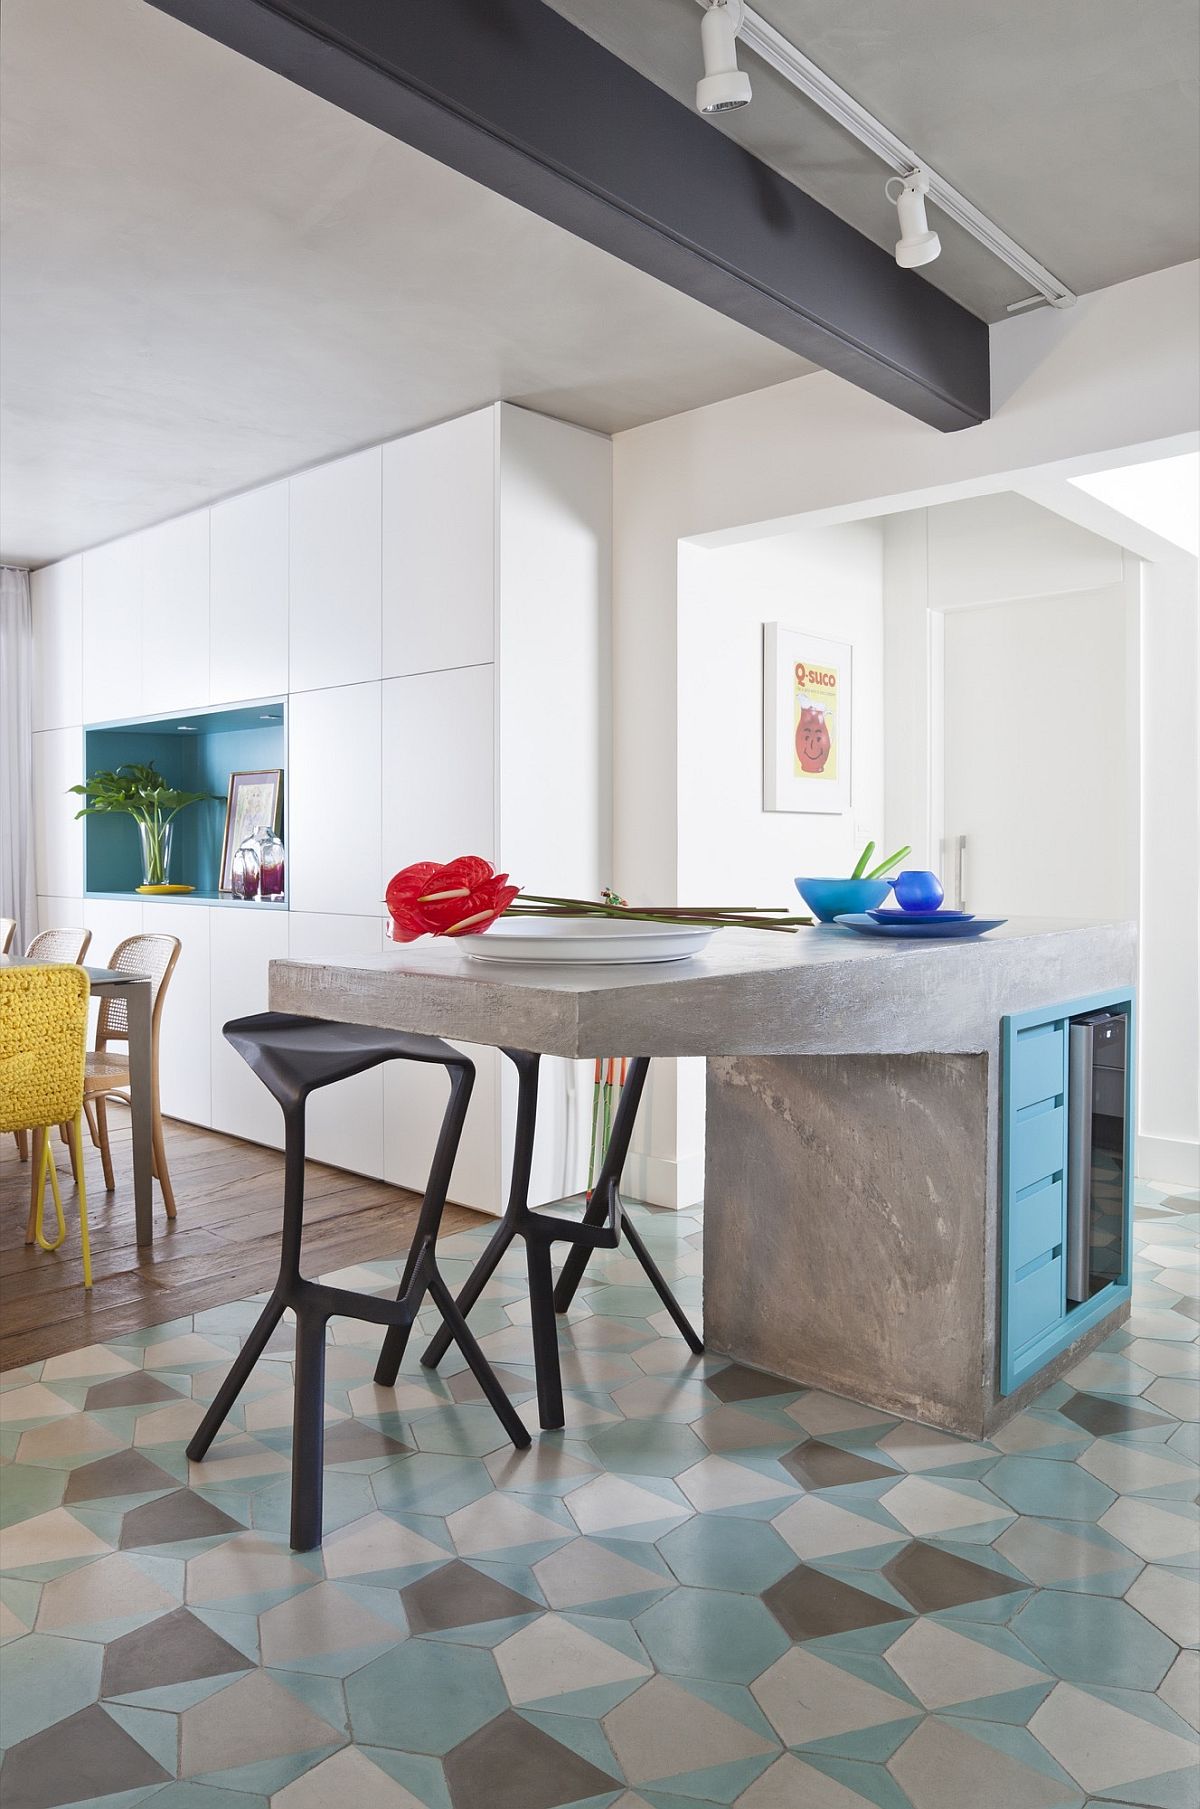 Super-cool-cement-kitchen-island-along-with-hexagonal-floor-tiles